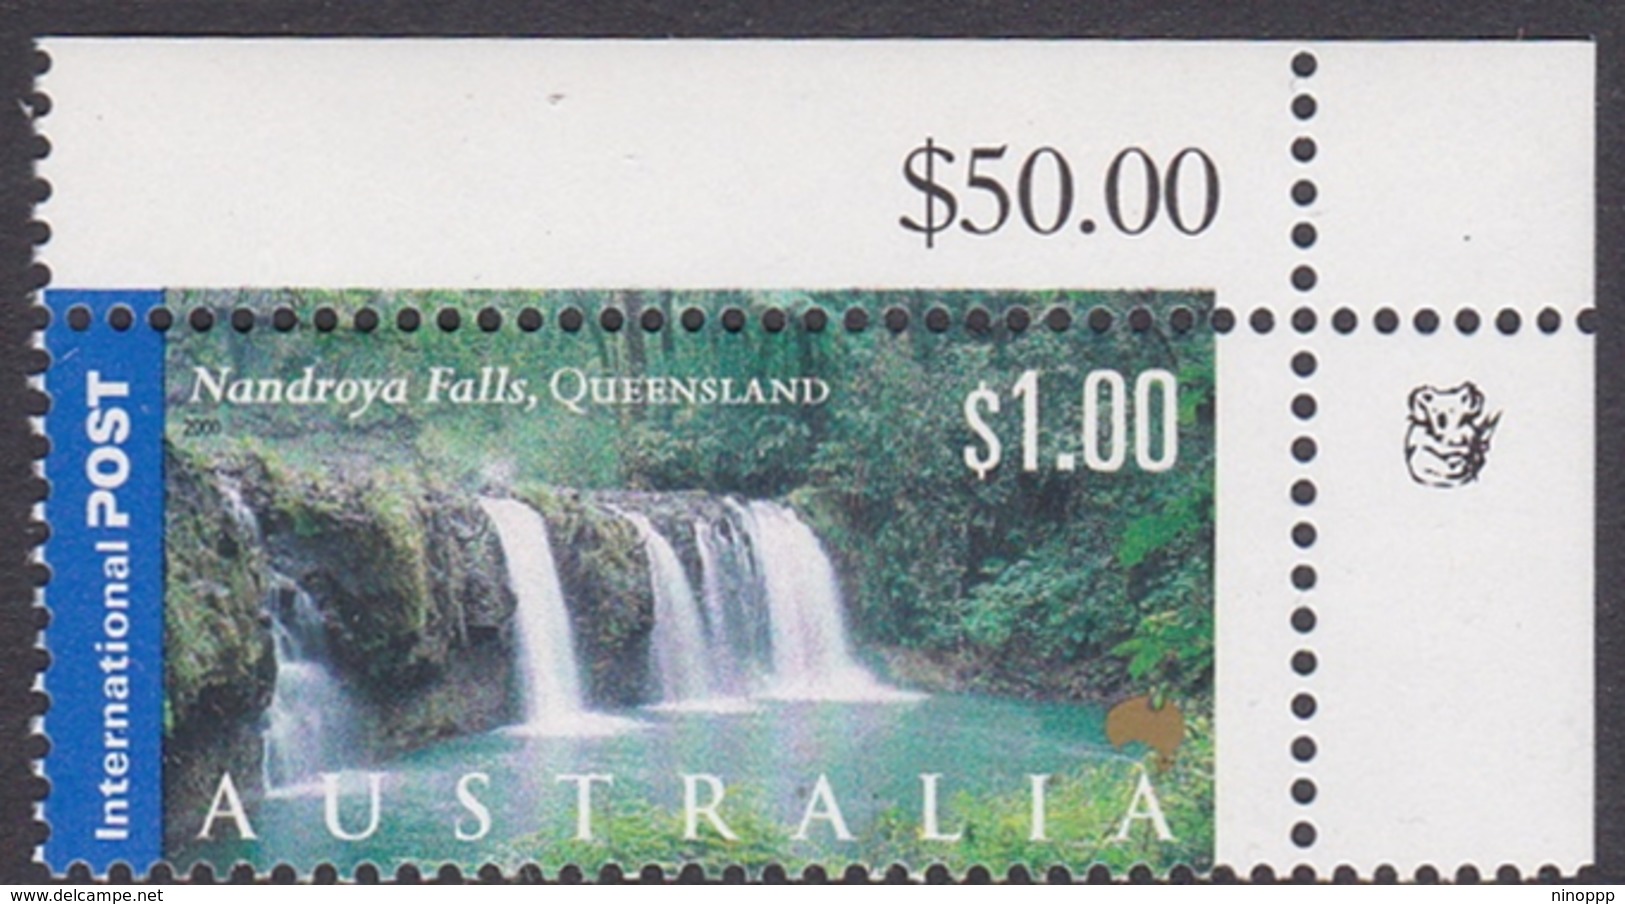 Australia ASC 1835a 2000 Panorama $ 1.00 Nandroya Falls 1 Koala Reprint, Mint Never Hinged - Prove & Ristampe